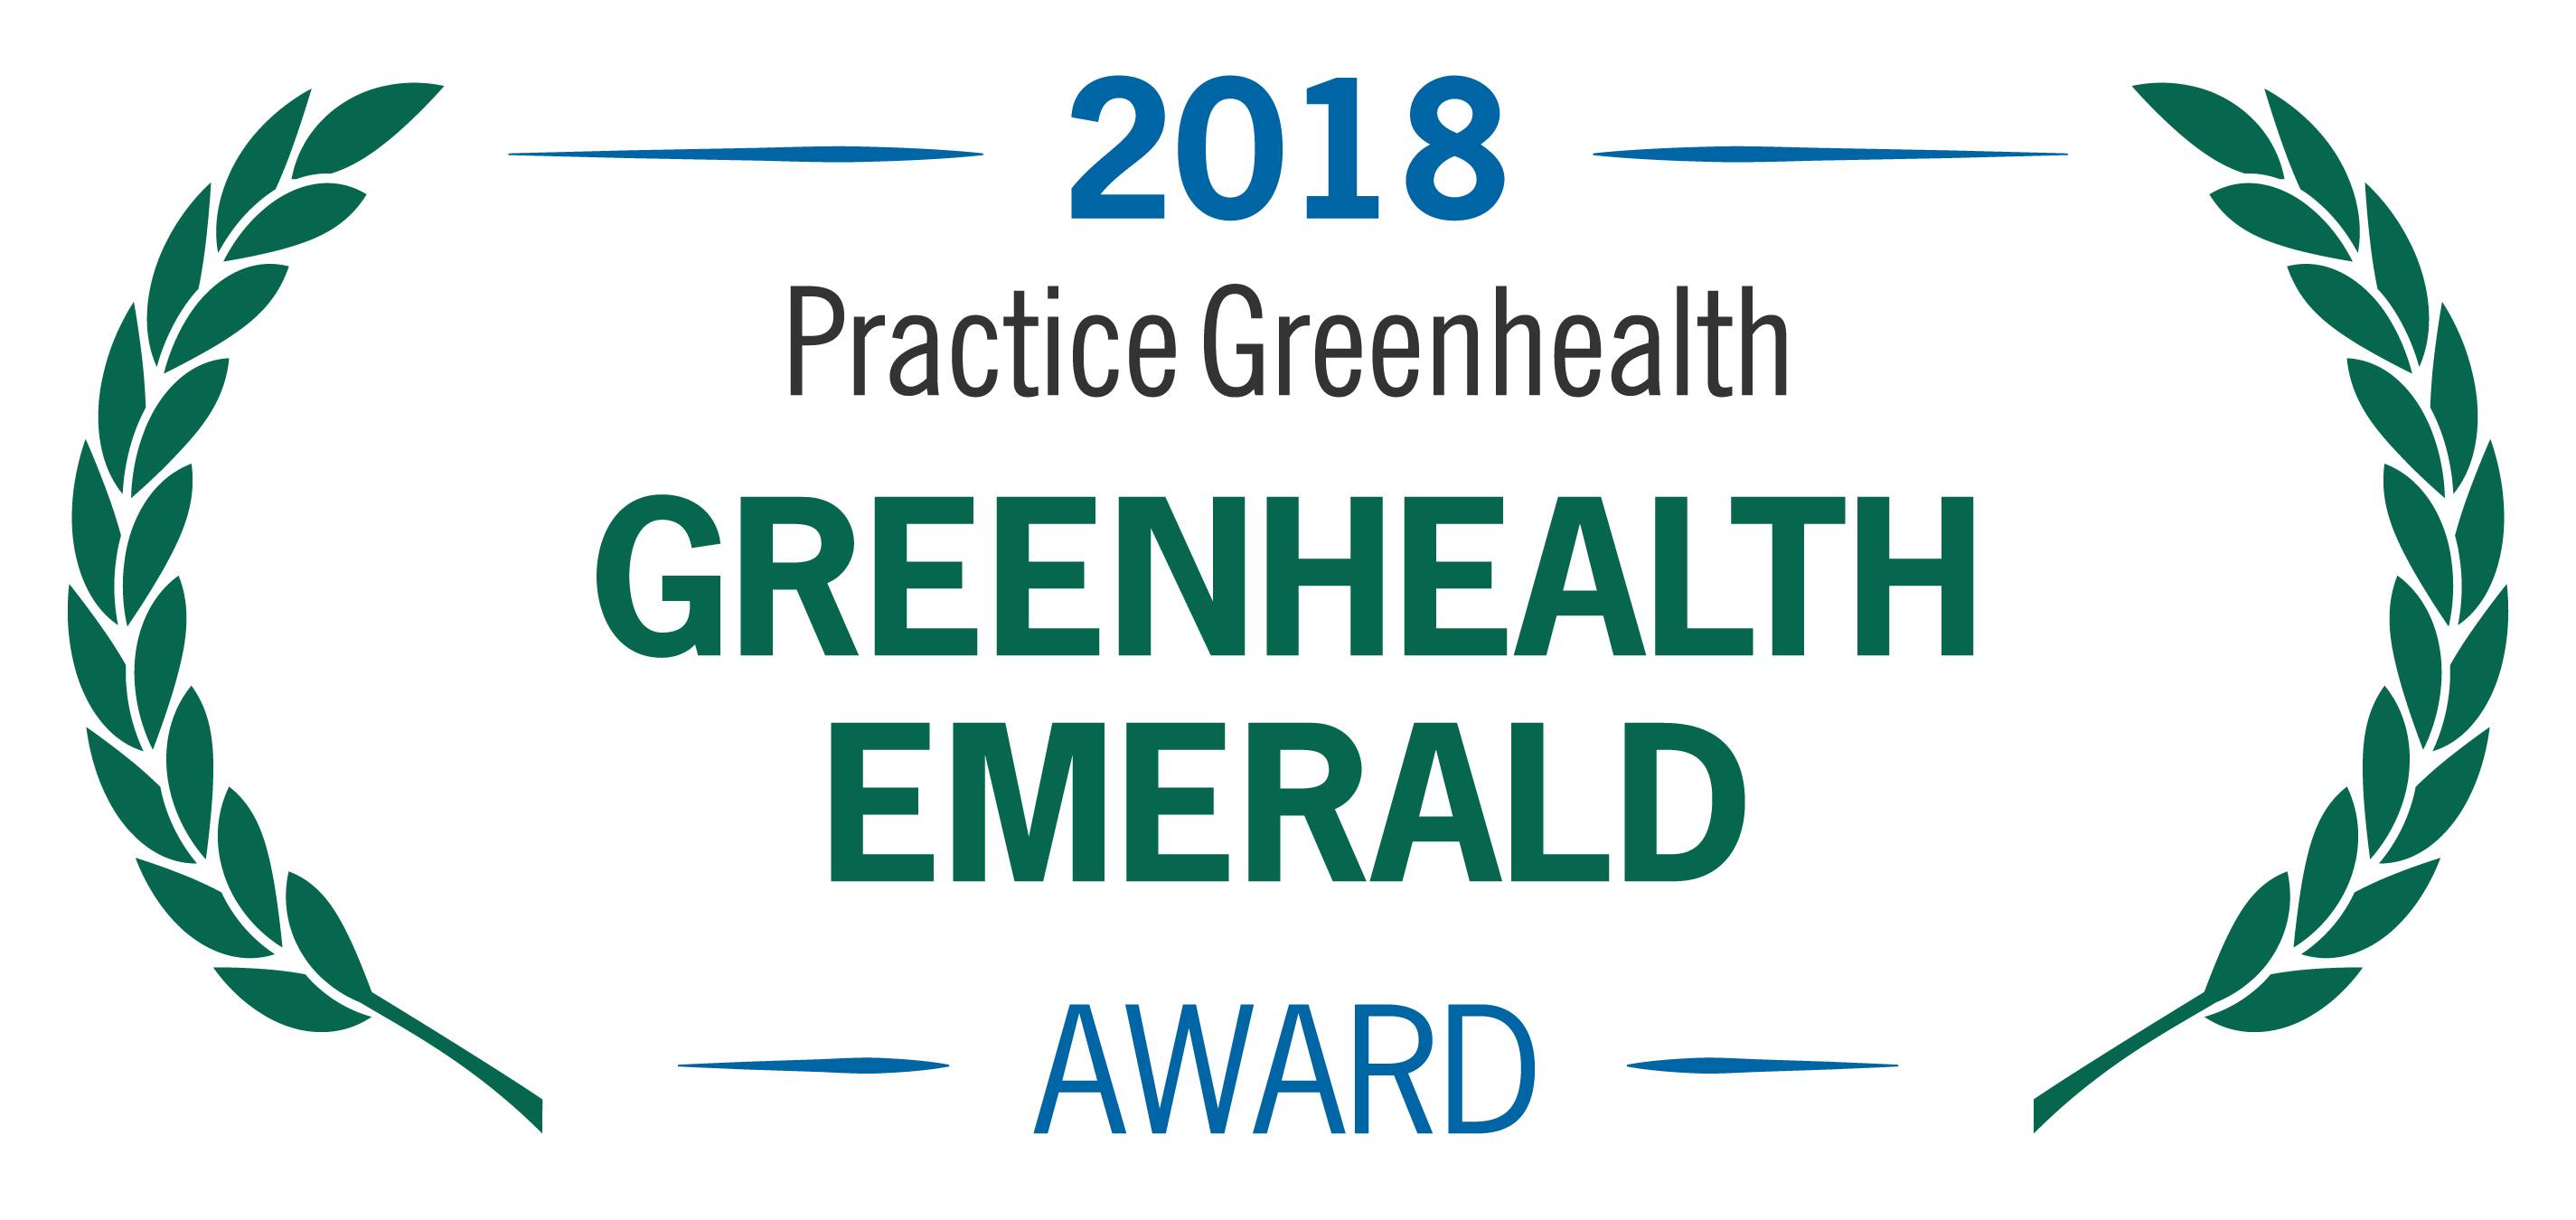 2018 Practice Greenhealth Emerald Award